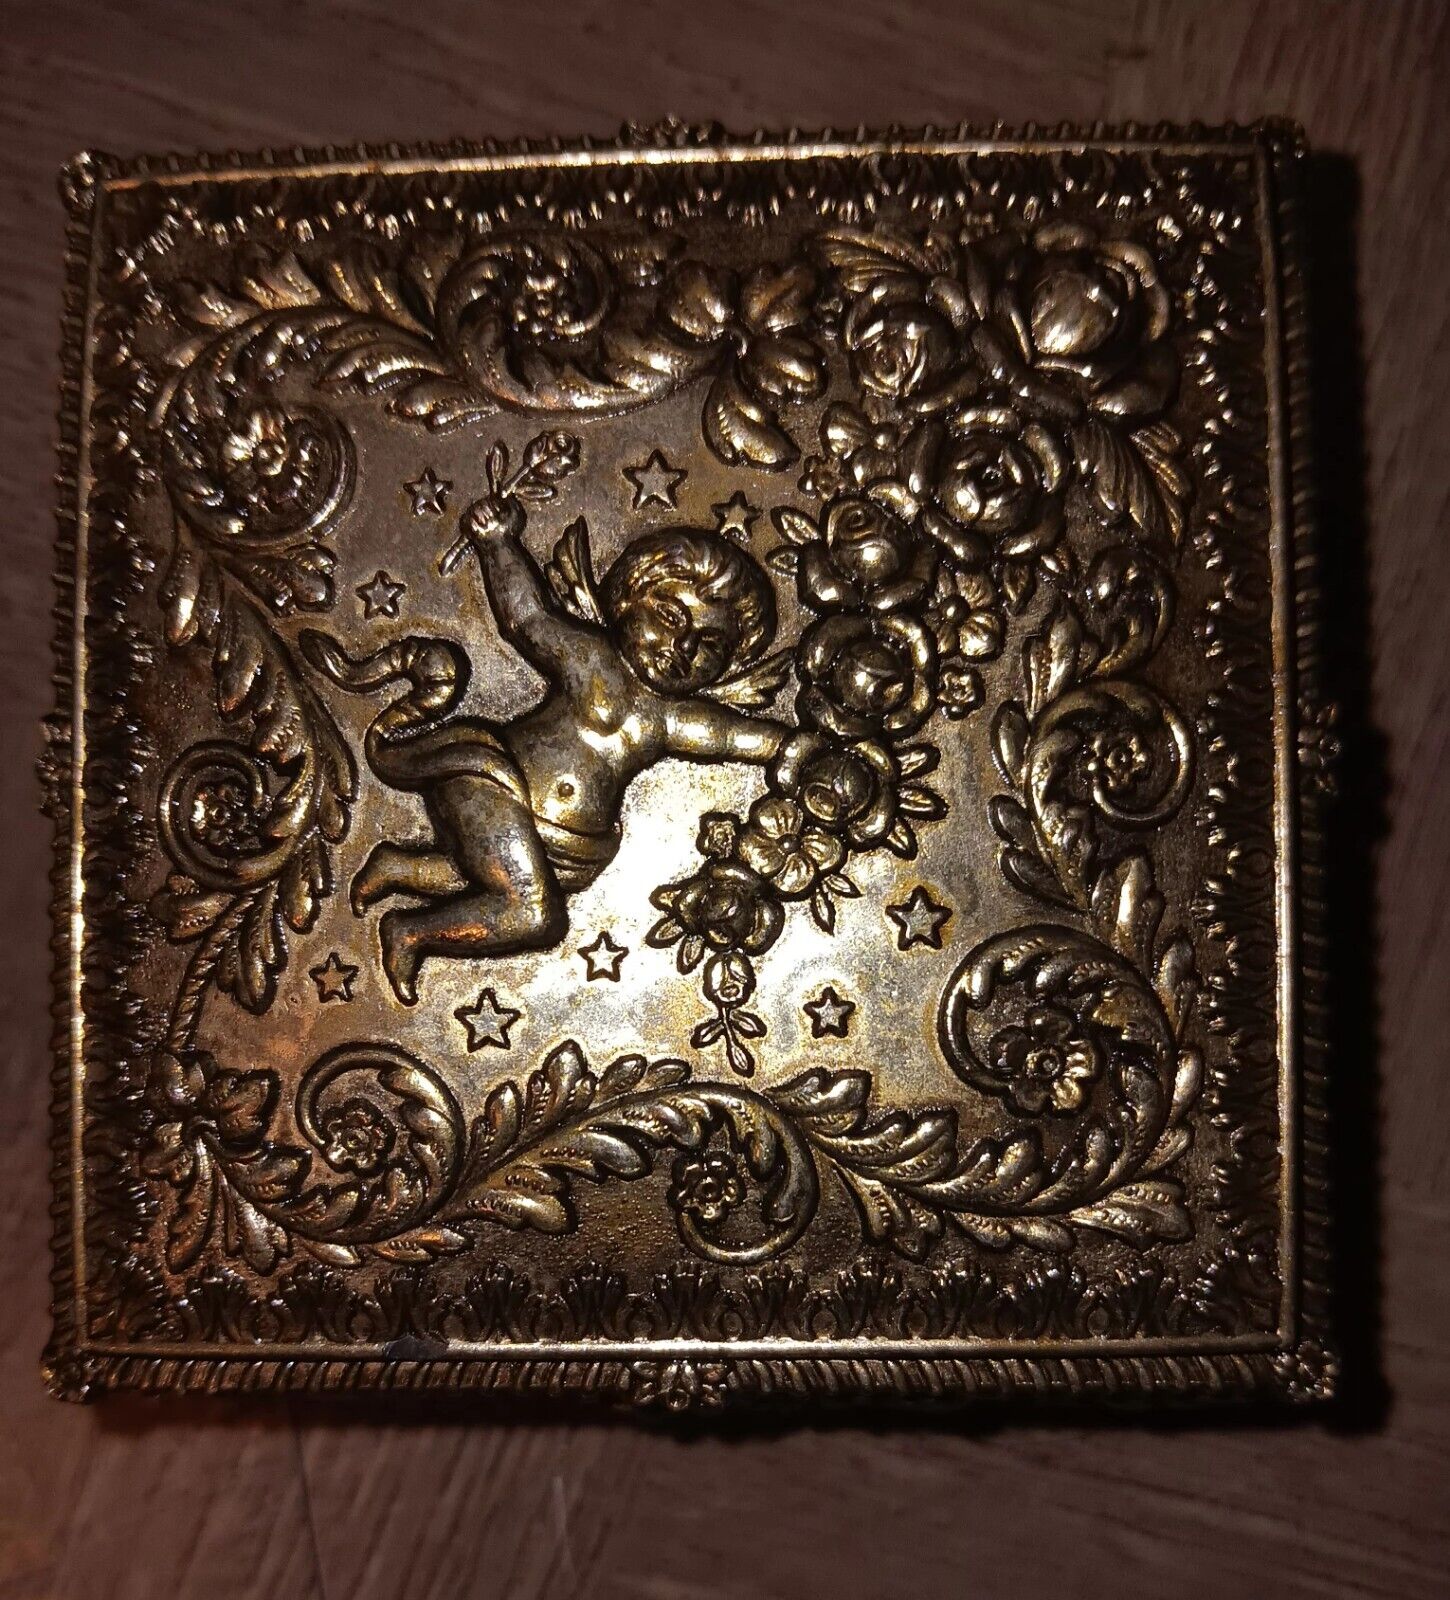  Vintage Silver Footed Jewelry Trinket Box  Angel Raised Pattern Japan  4x4x2